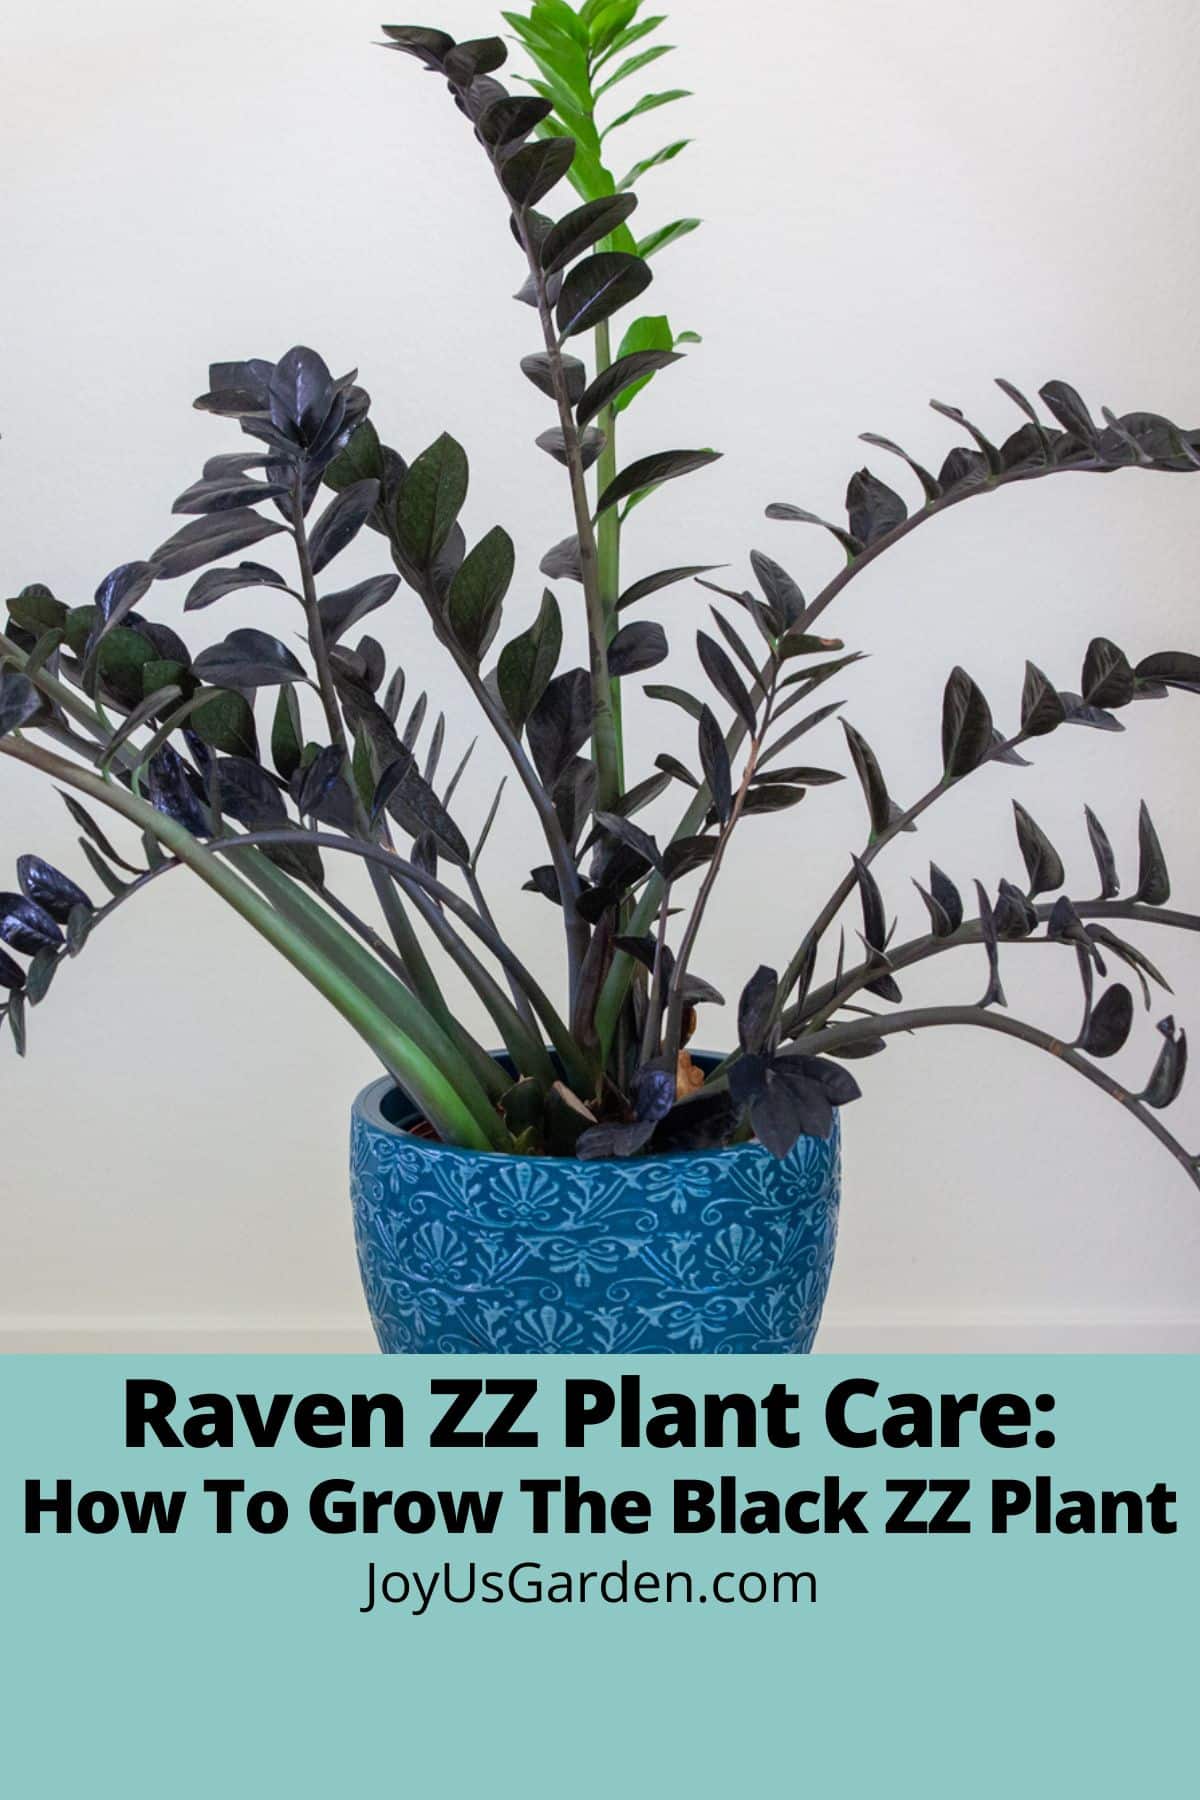 Lead photo of Raven ZZ Plant growing in blue pot